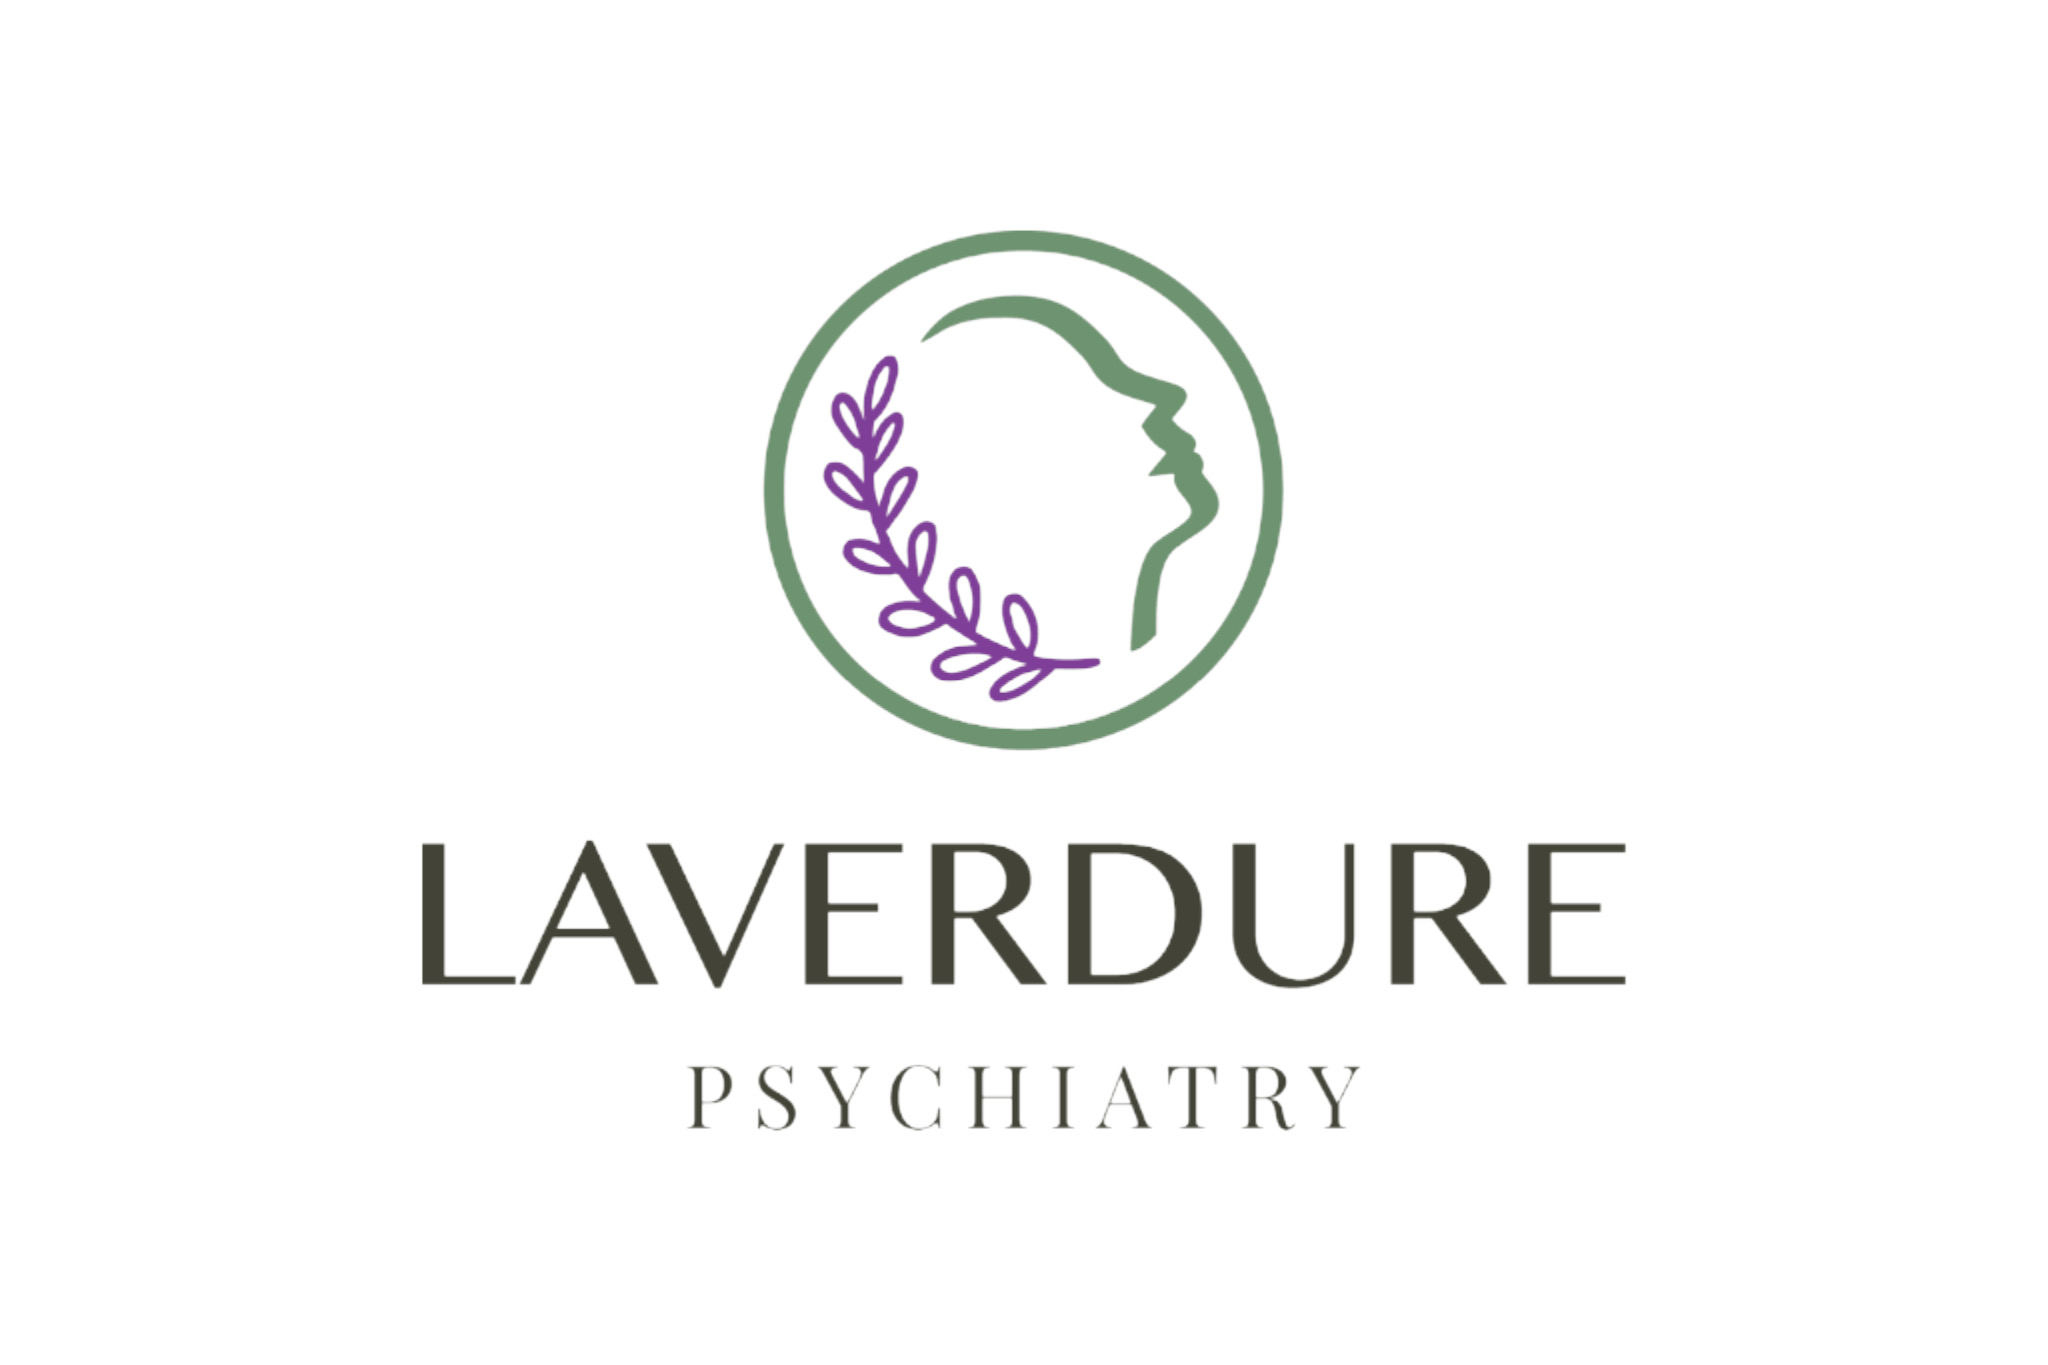 Laverdure Psychiatry logo